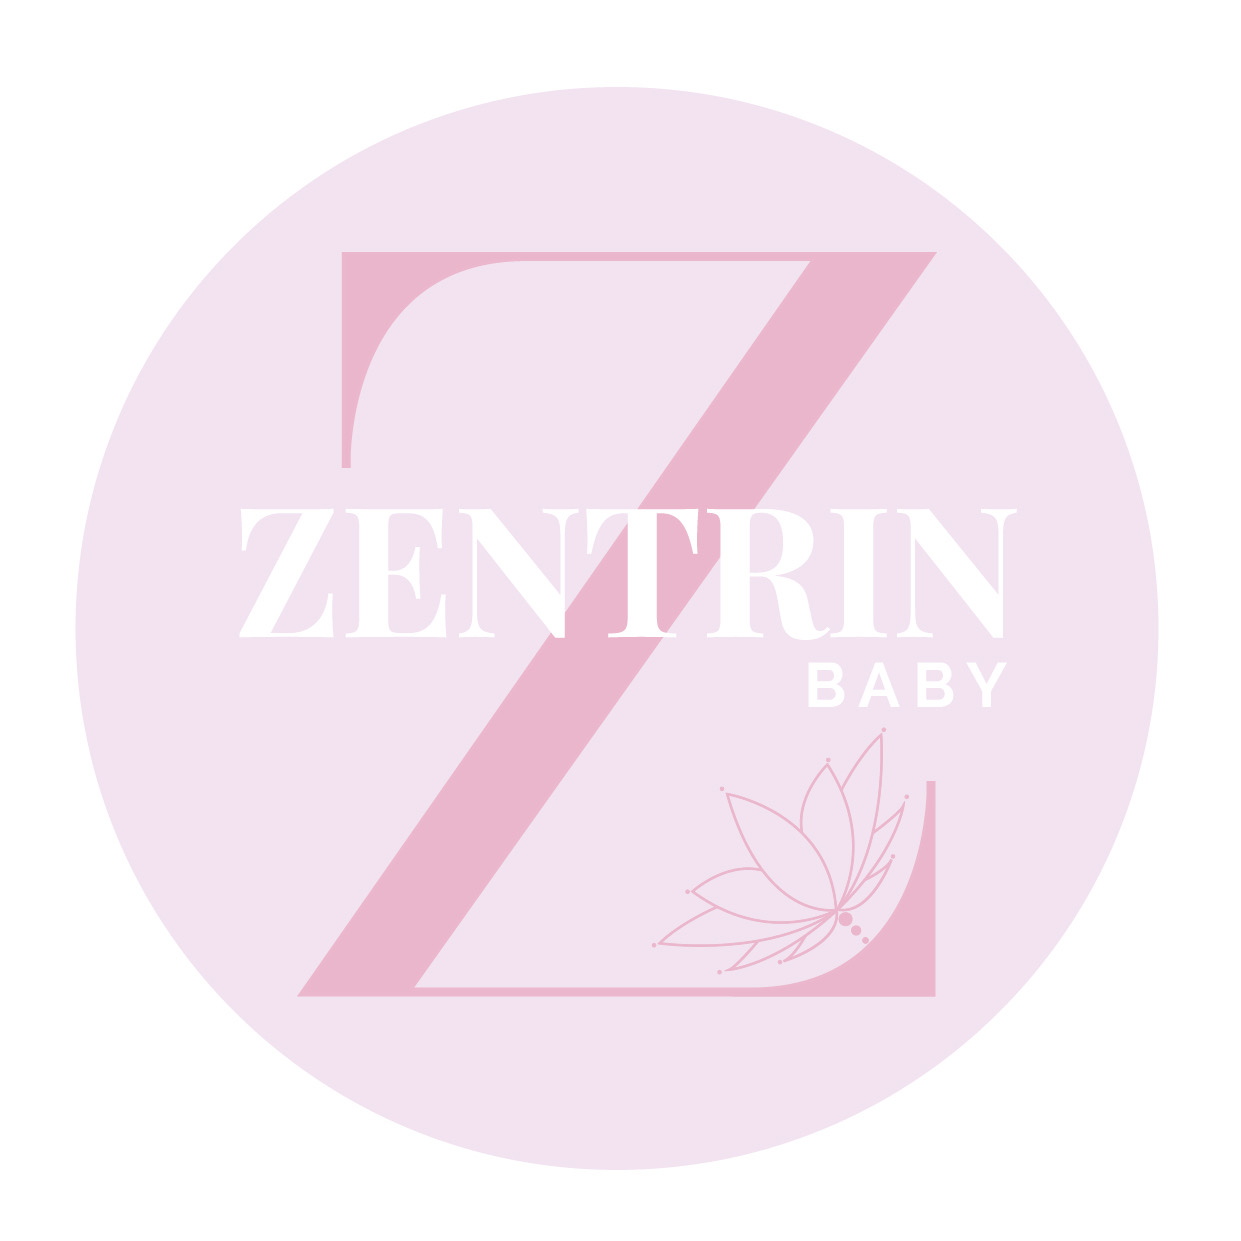 Zentrin Baby 's logo